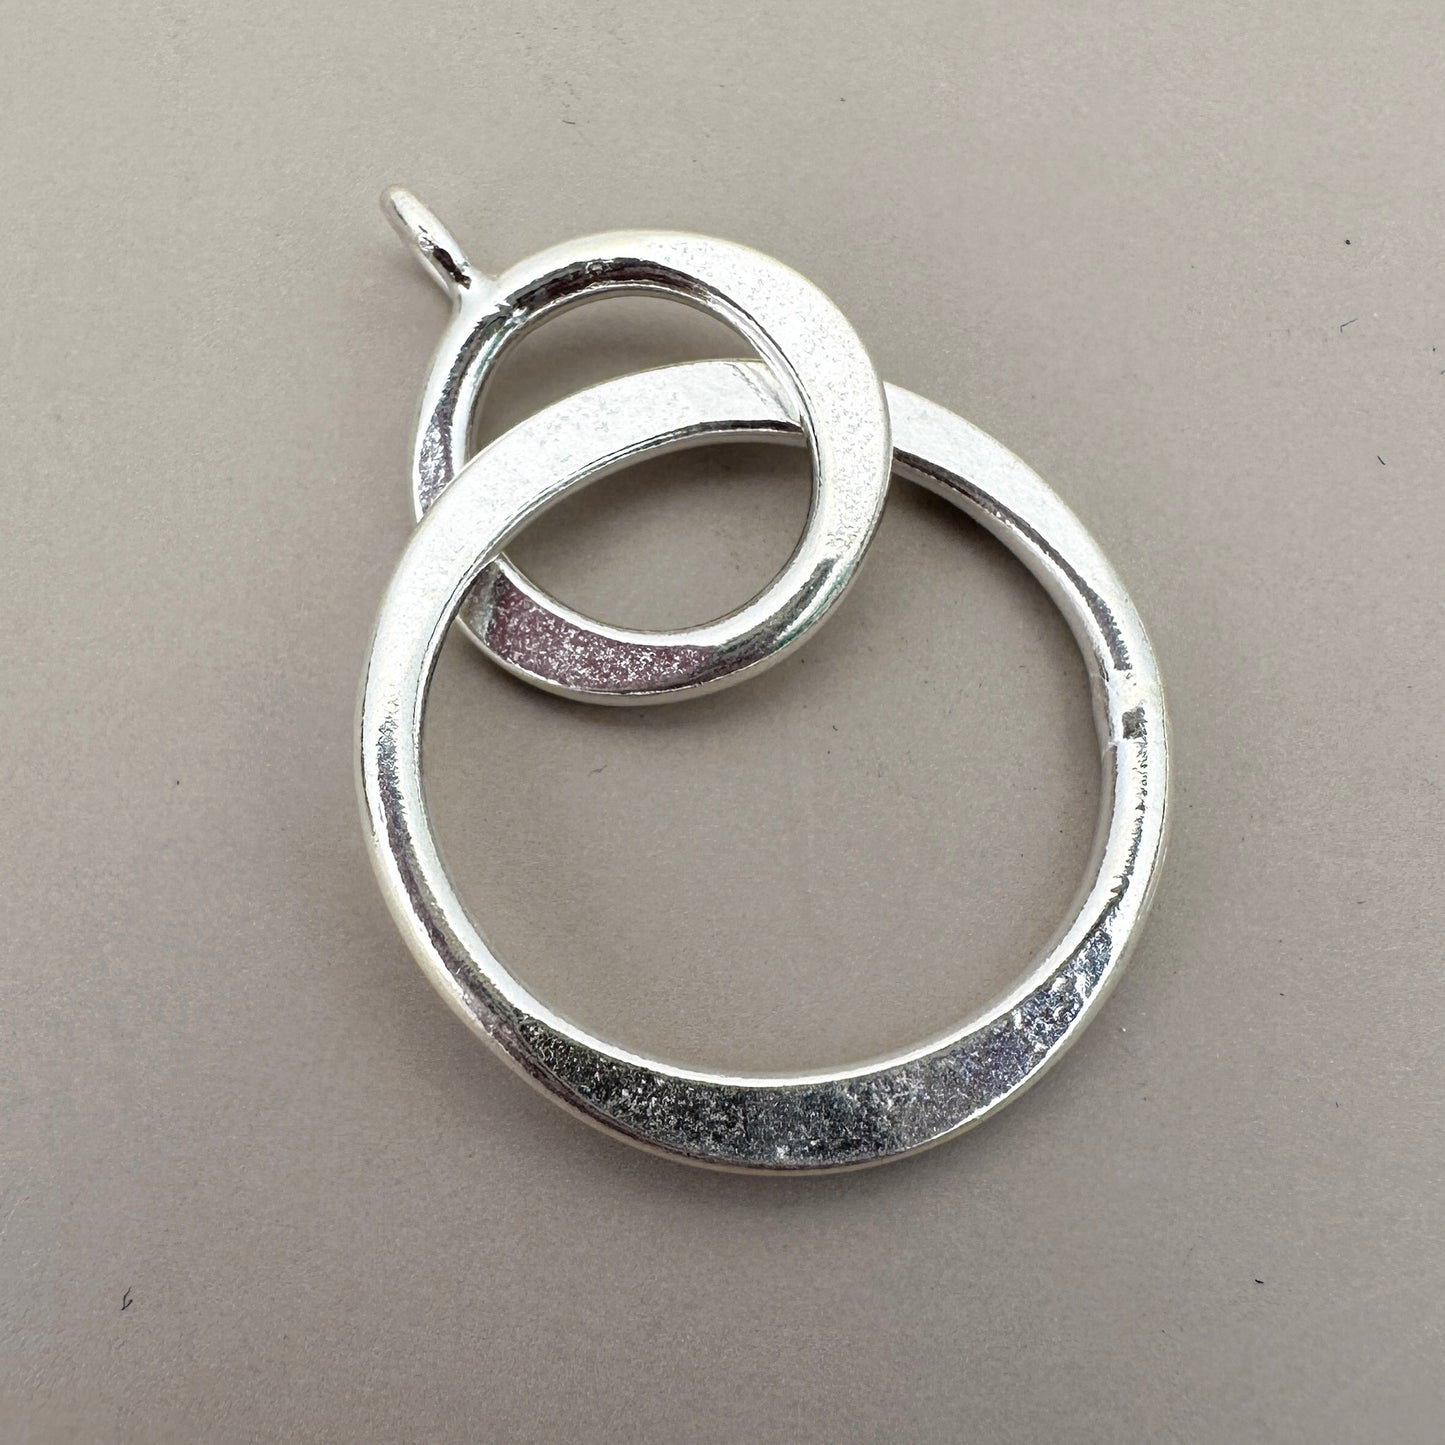 Large Linked Rings Thai Silver Pendant - 1 pc. (M1927)